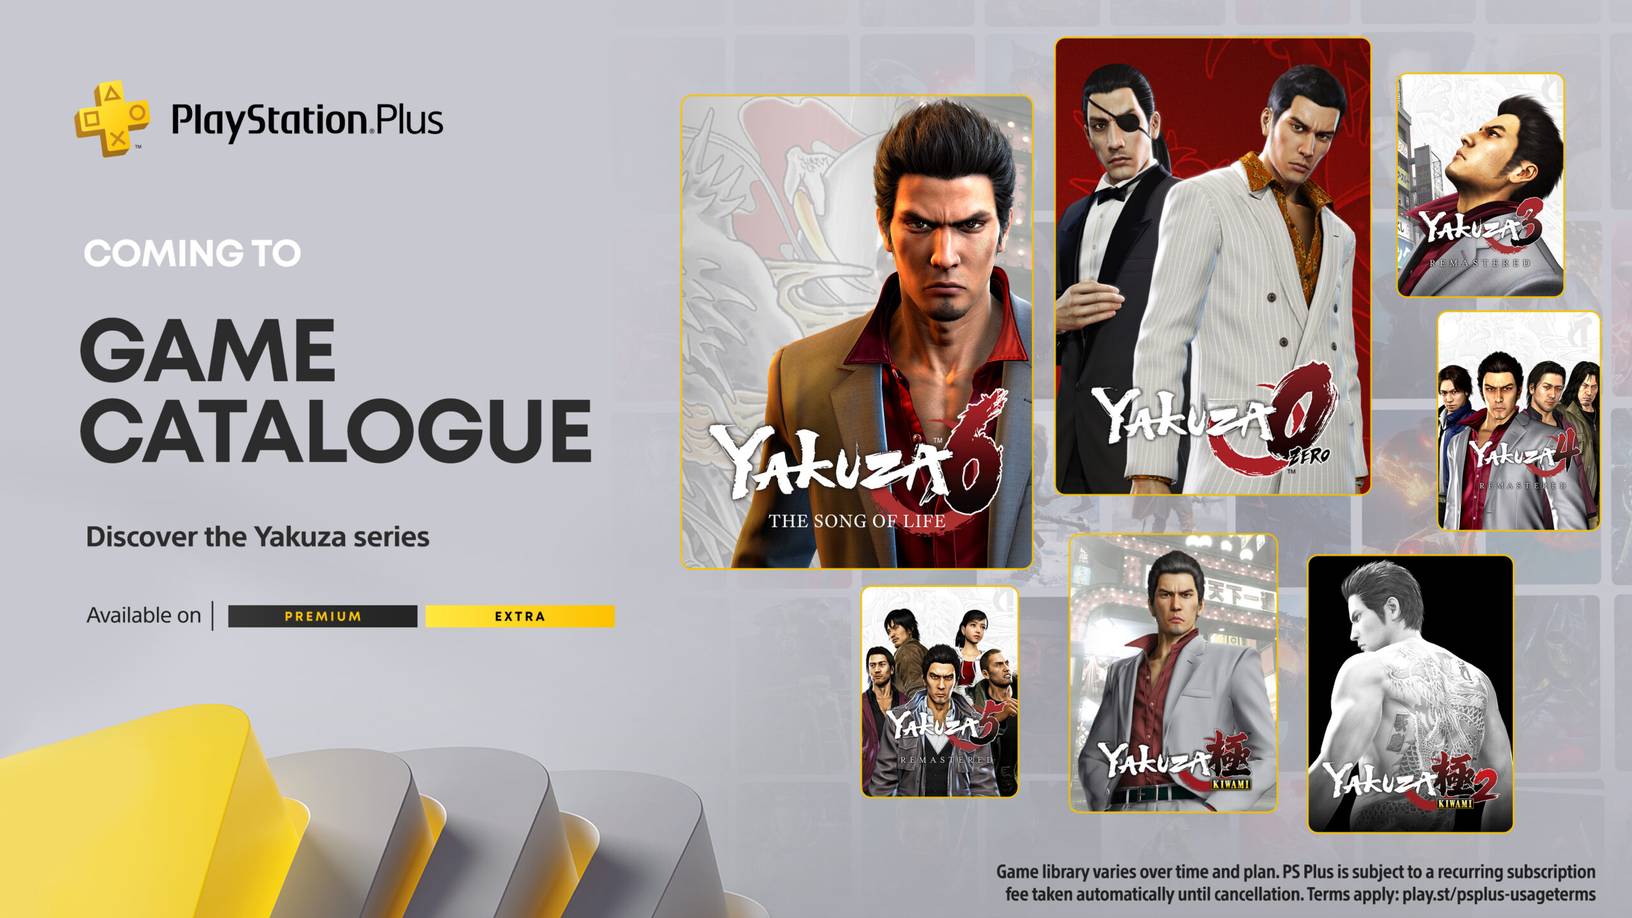 T Split Tijdens ~ PlayStation Plus Game Catalog to Add 8 Yakuza Games